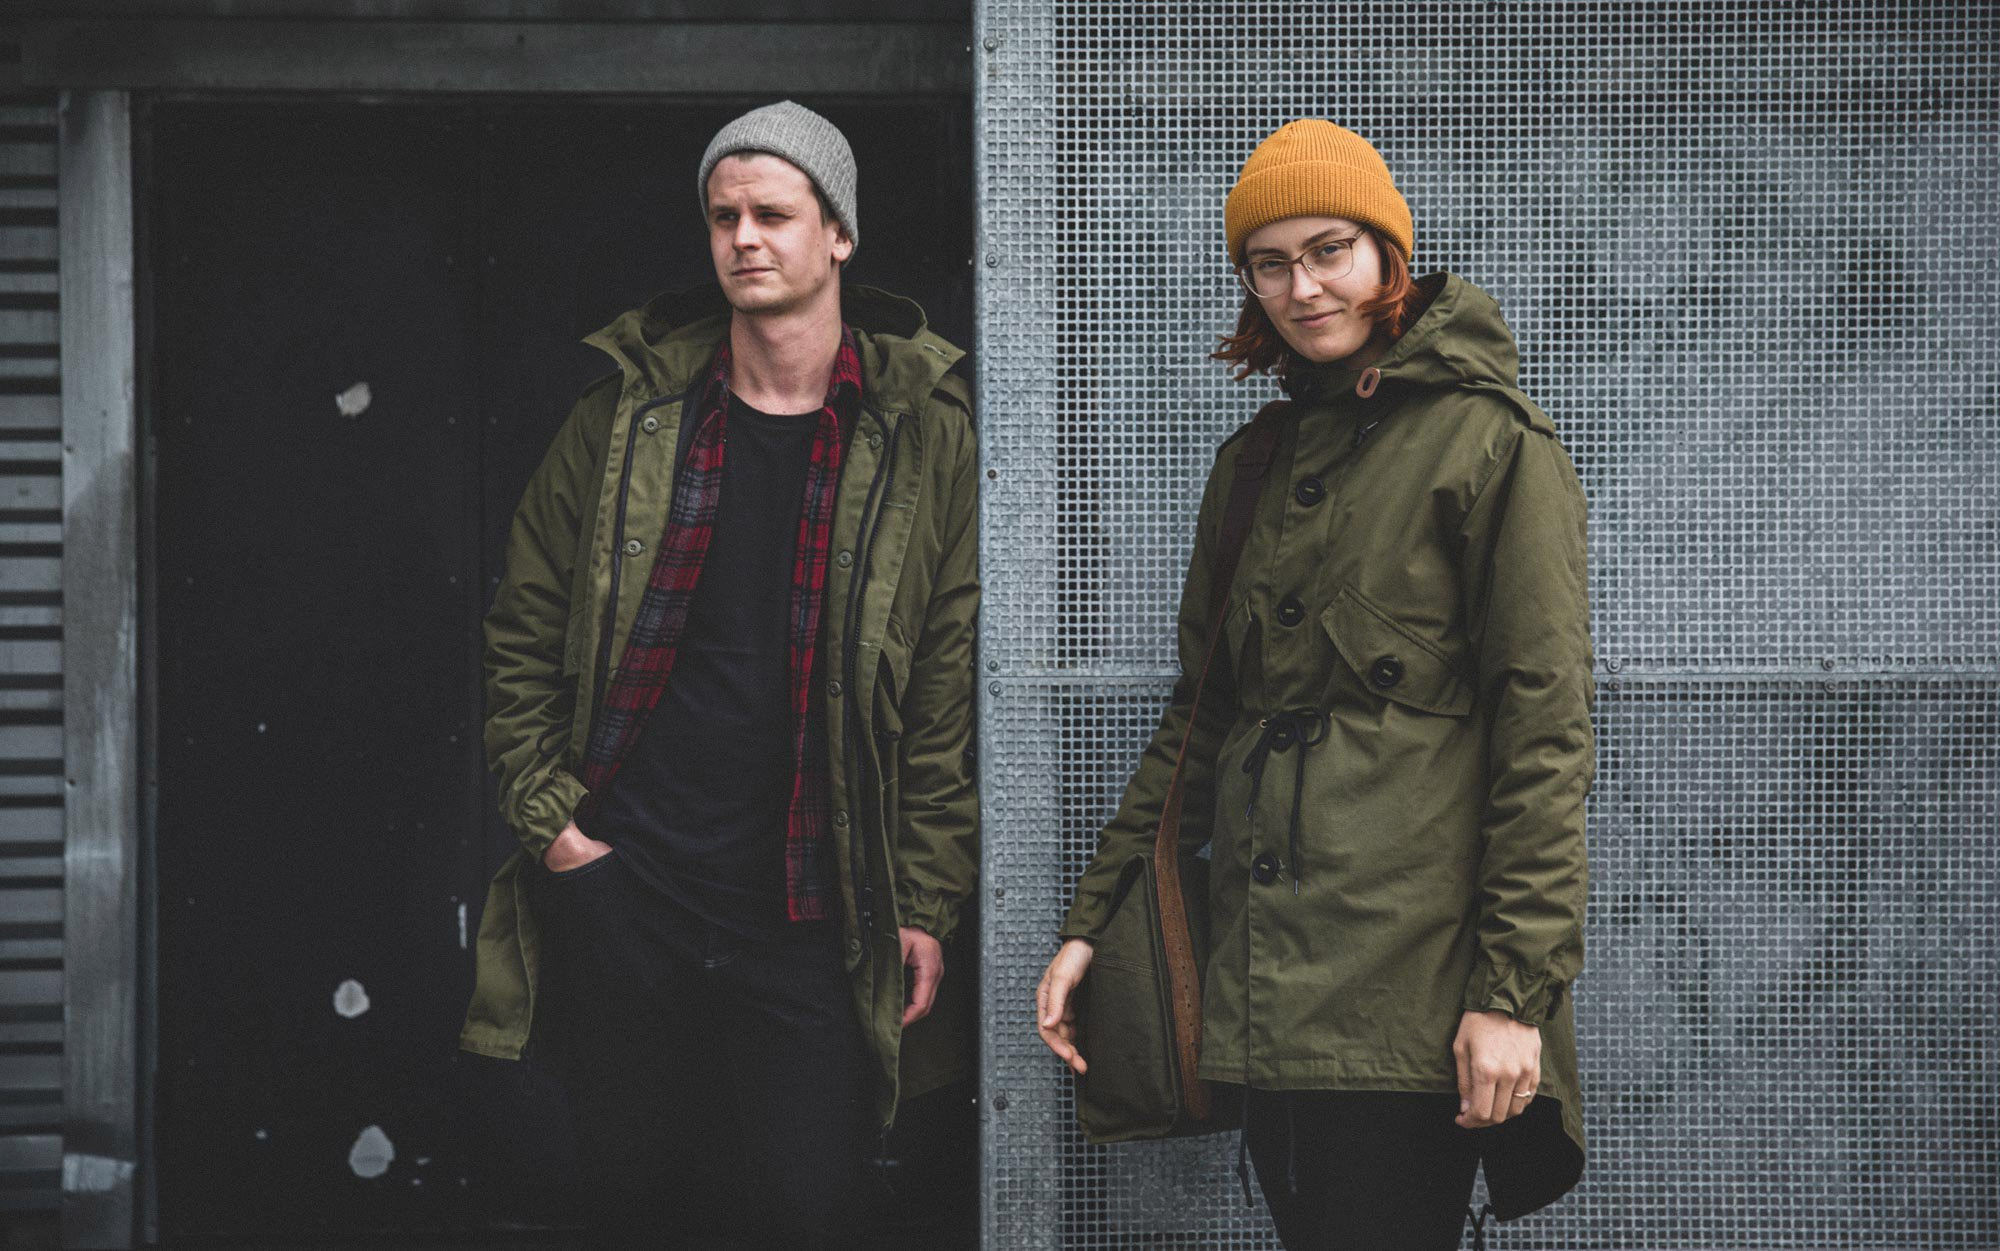 Man and woman in Särmä Windproof clothing